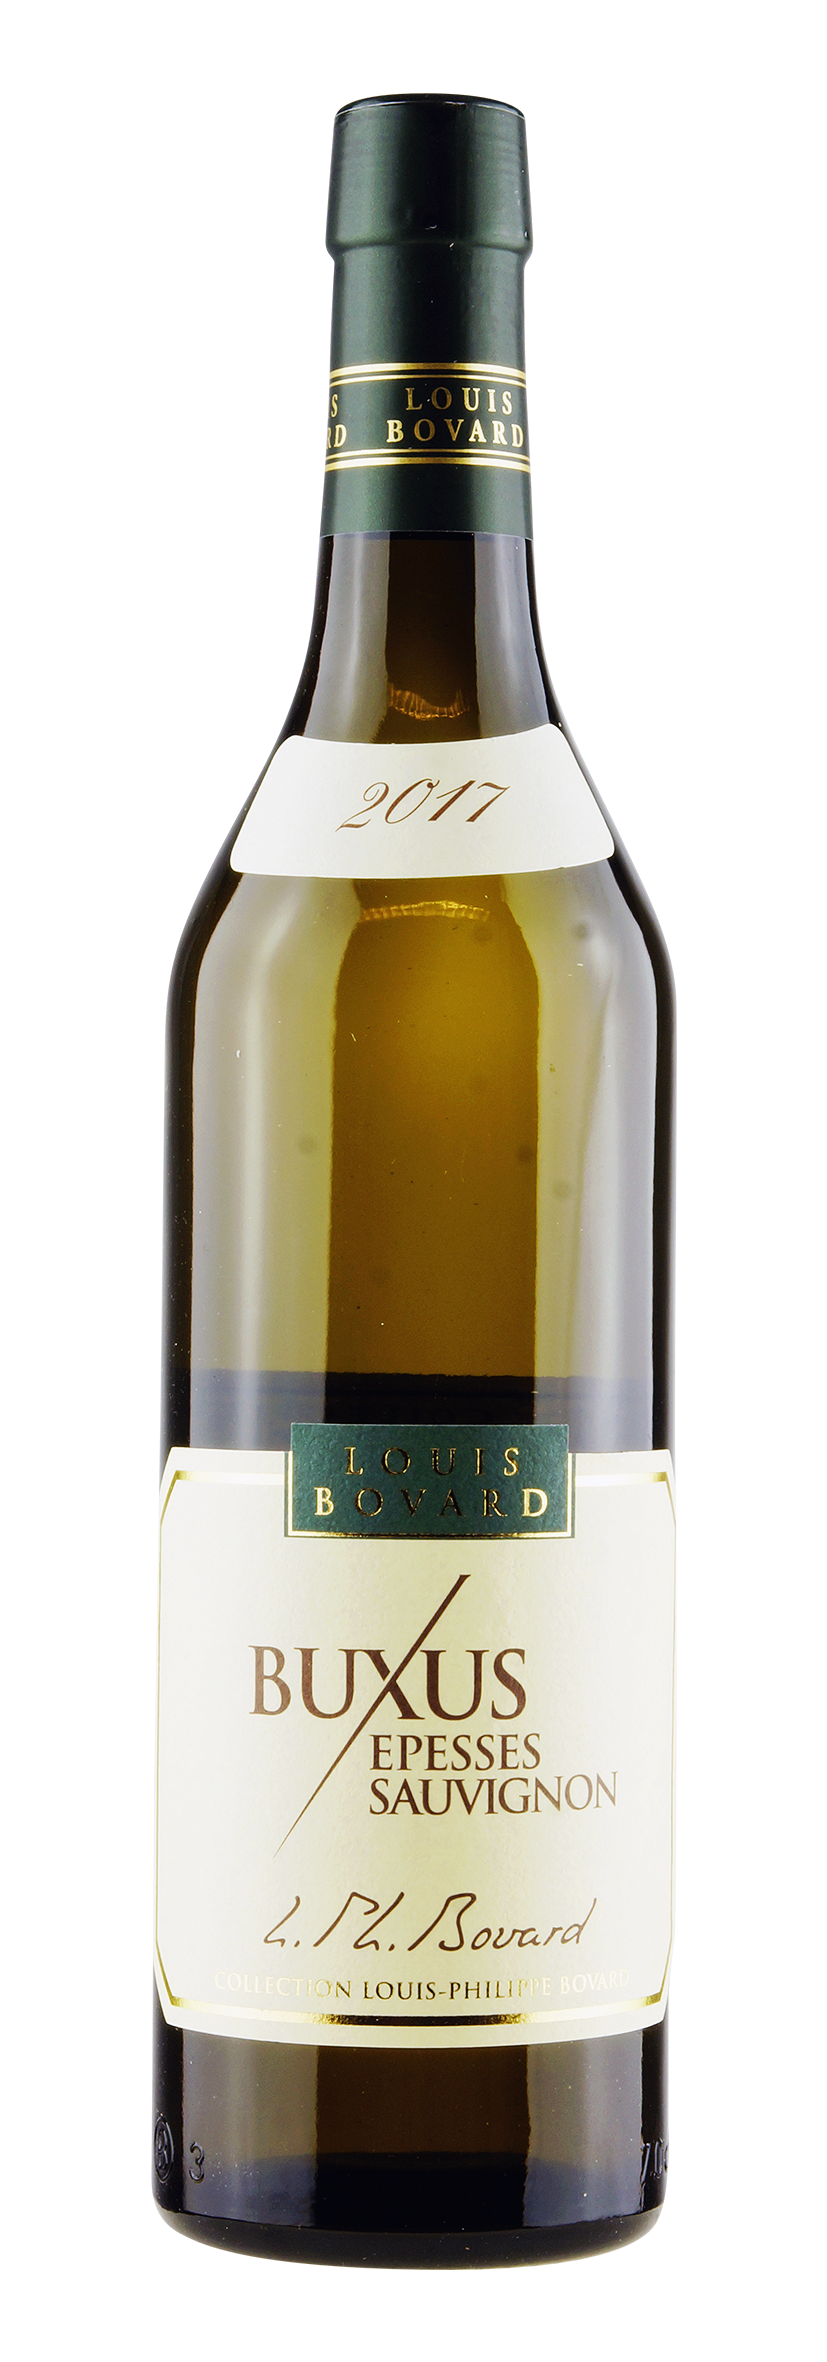 Epesses Grand Cru Lavaux AOC Buxus Sauvignon Blanc 2017